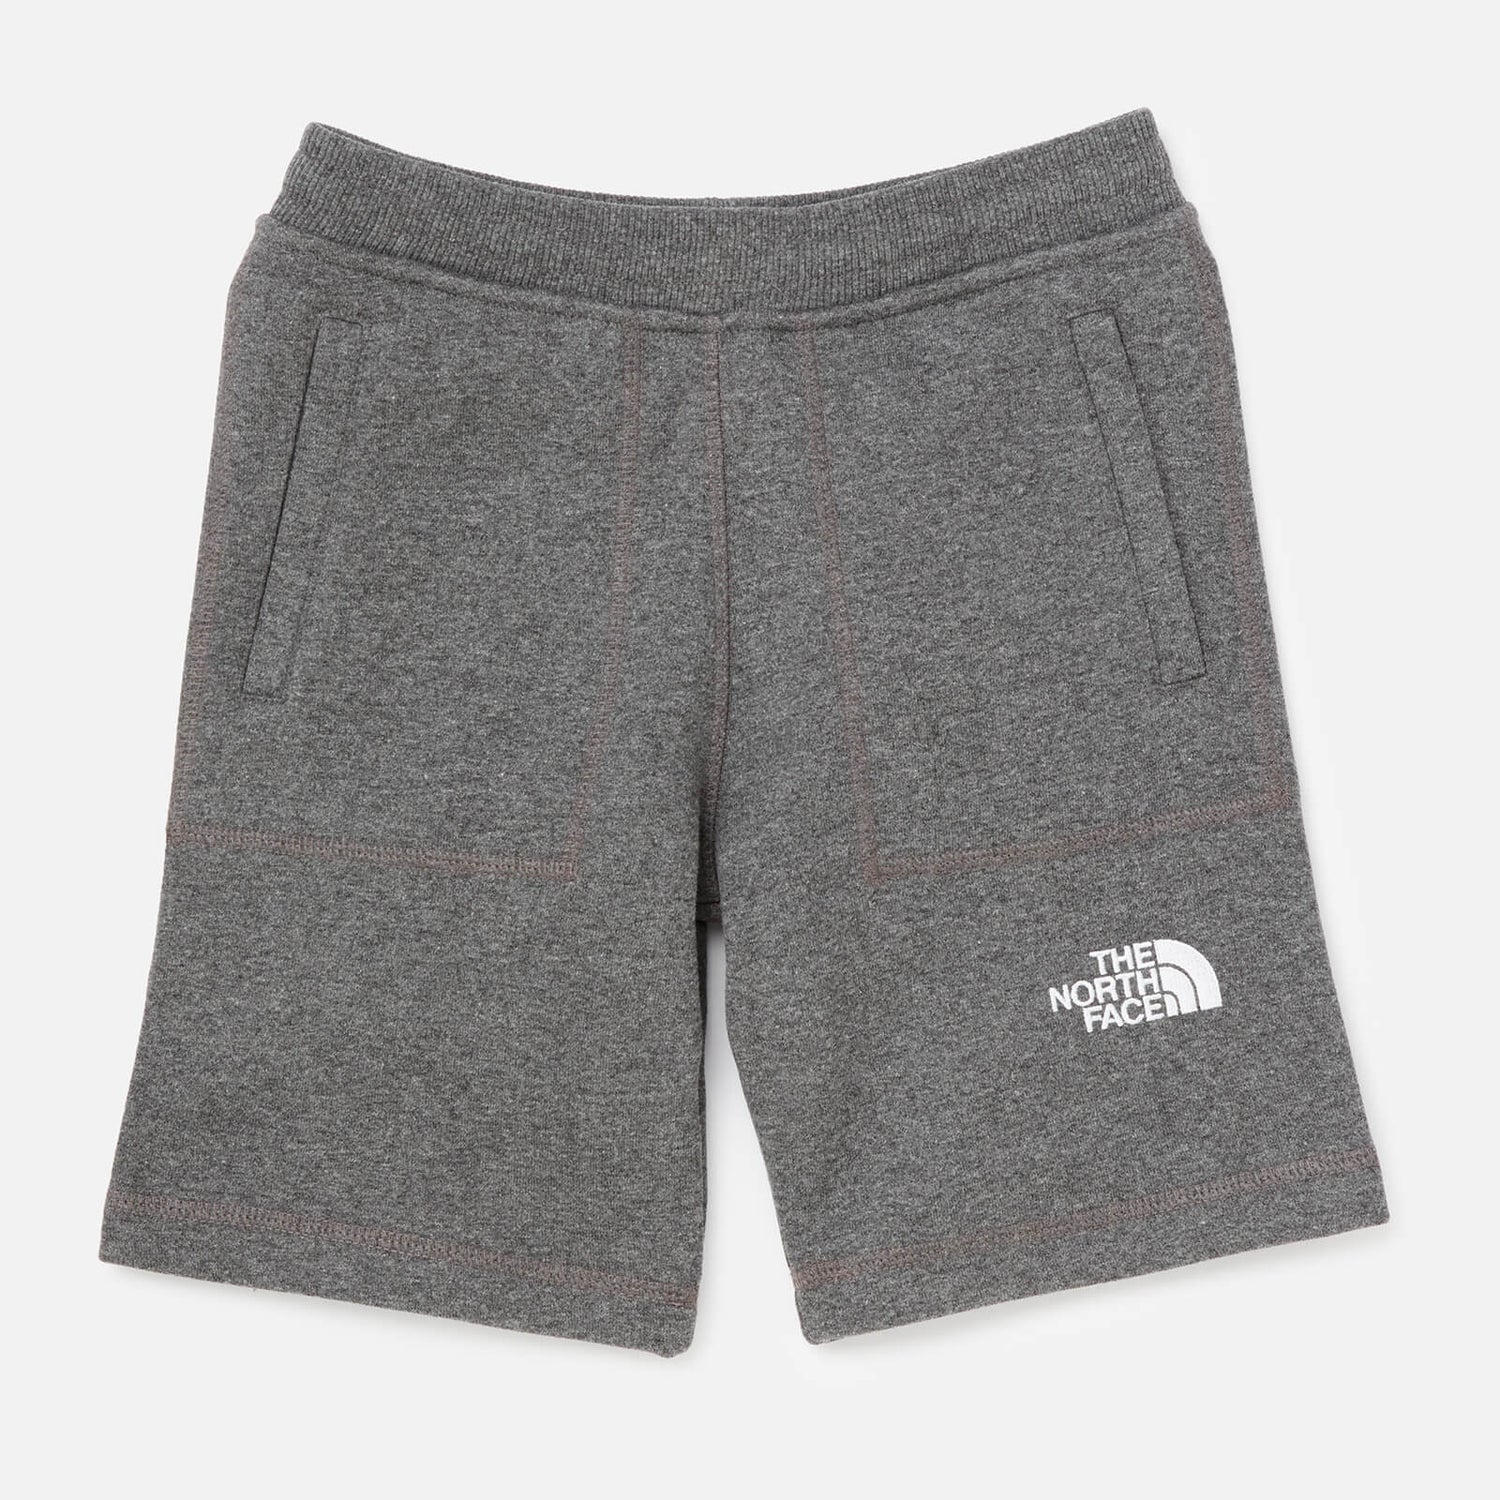 The North Face Boys' Youth Fleece Shorts - Grey